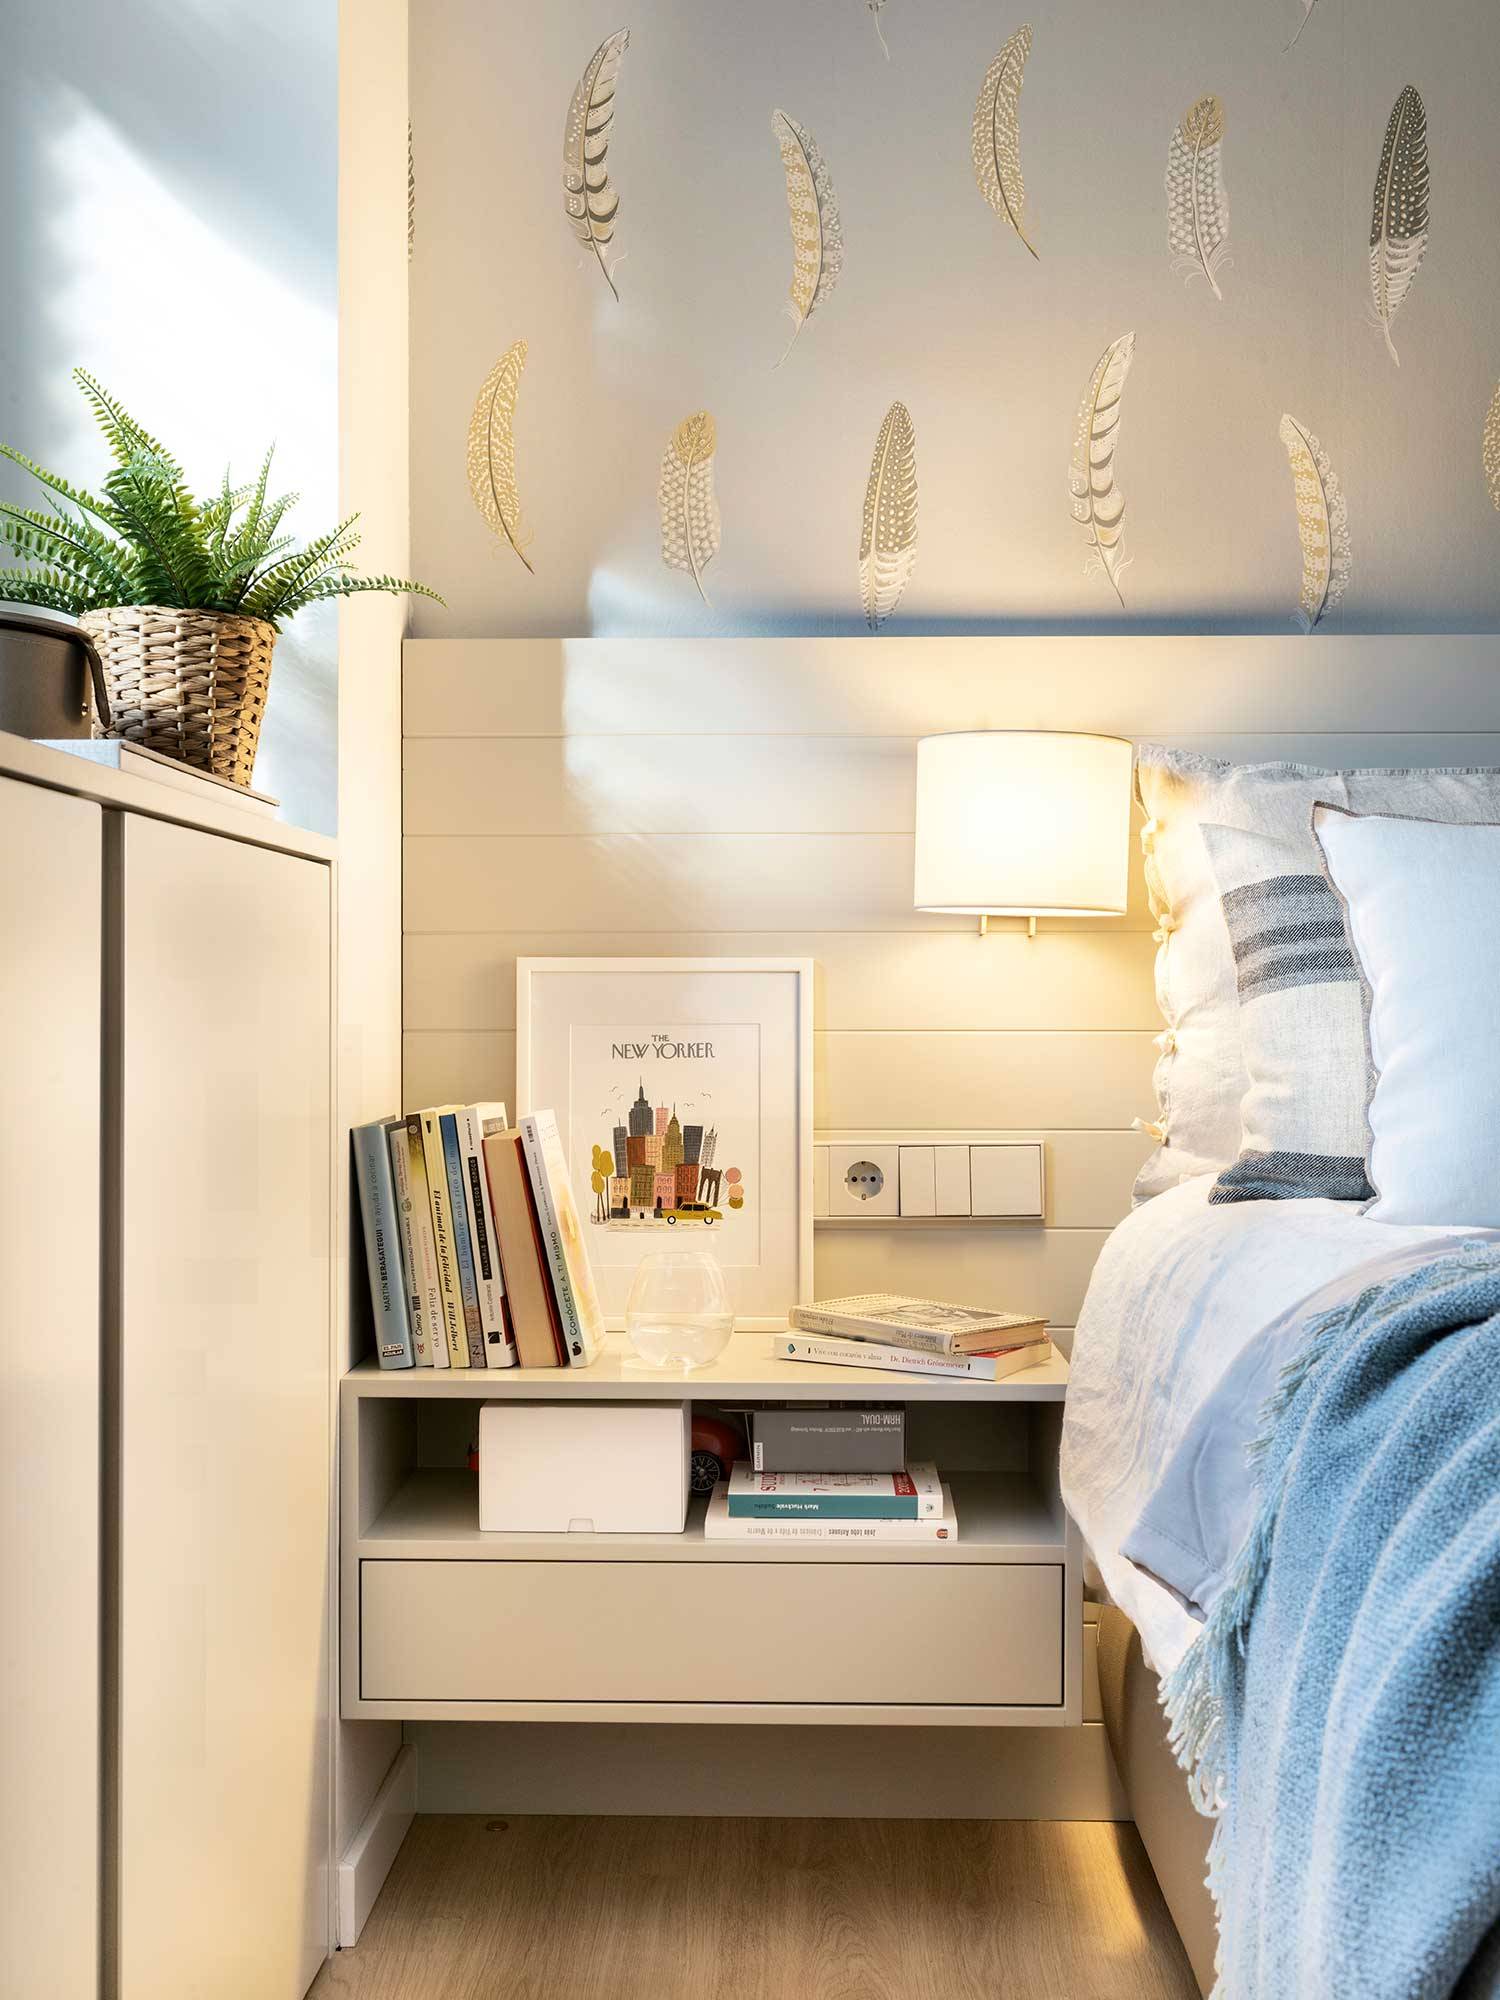 Detalle de cabecero de dormitorio con pared con papel pintado de plumas_00522579